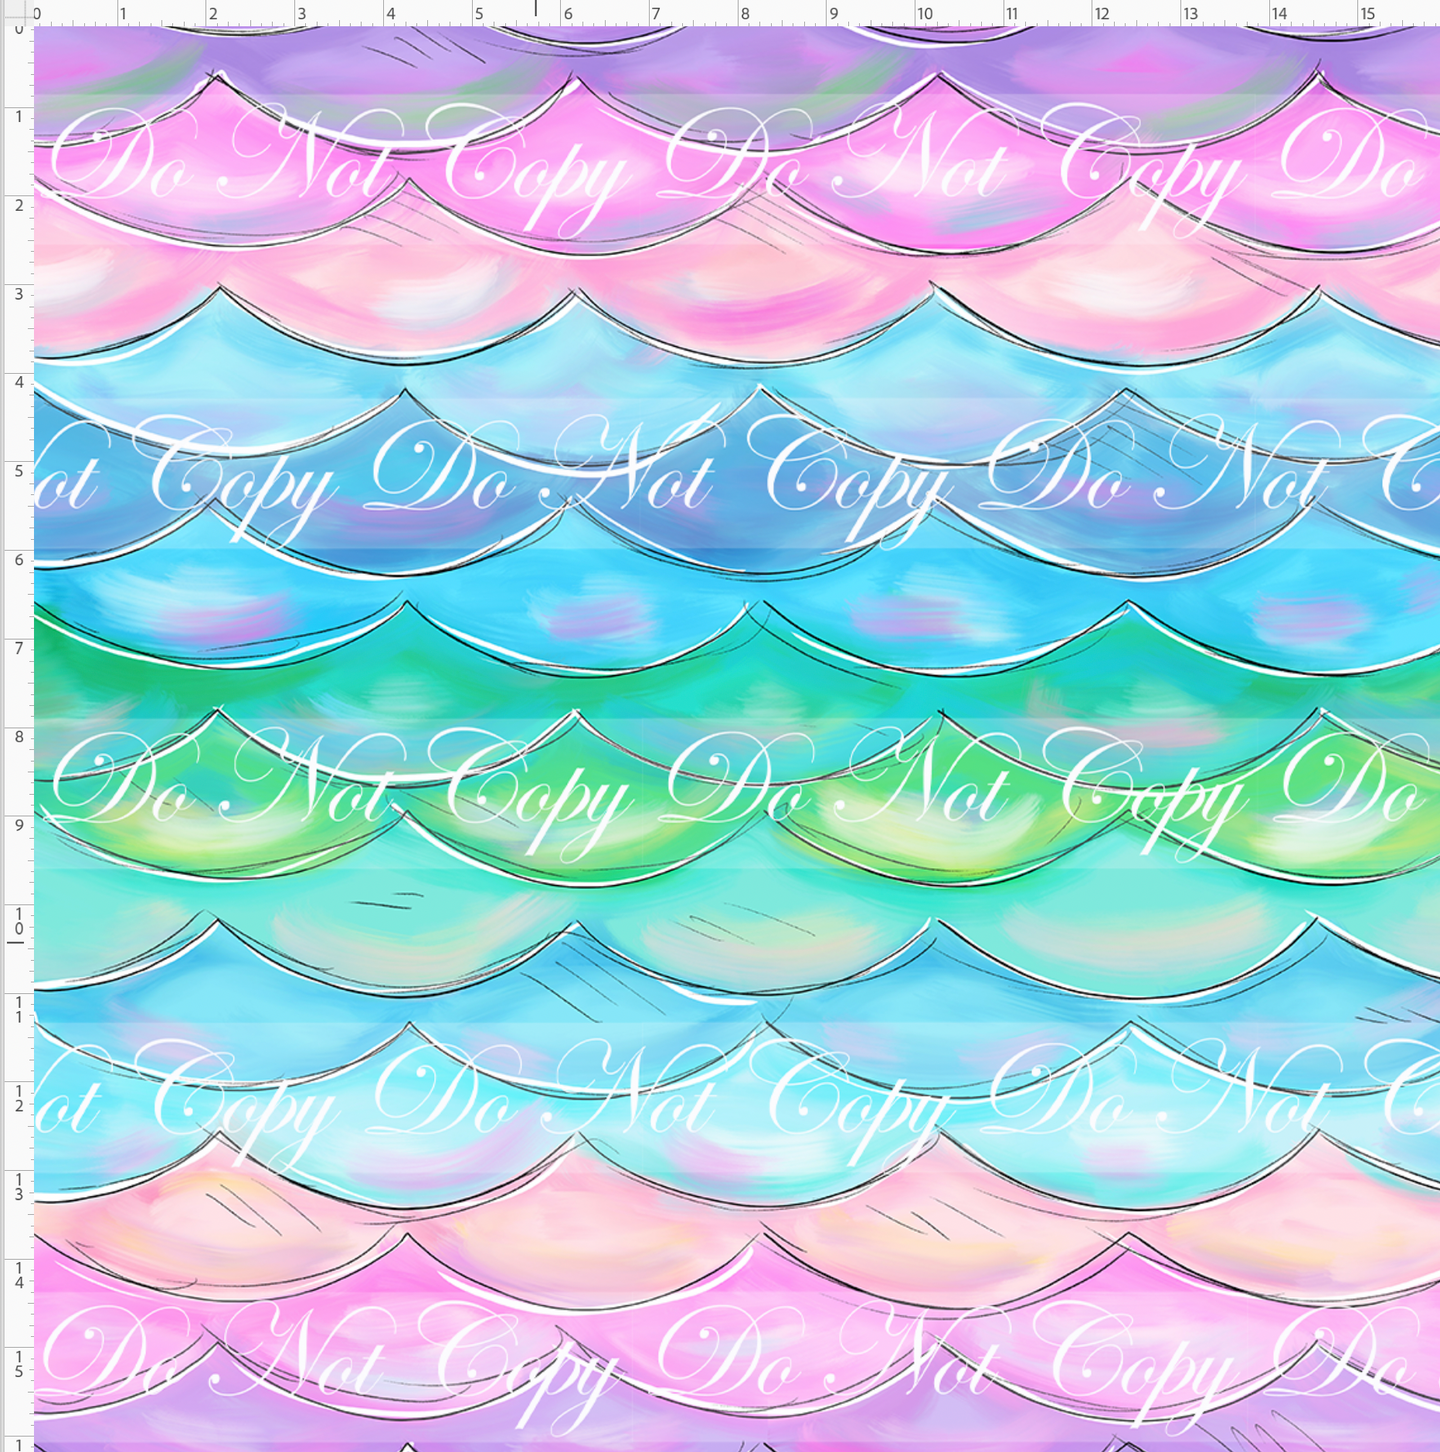 Retail - Mermaid Princesses - Mermaid Scales - Horizontal Color - LARGE SCALE